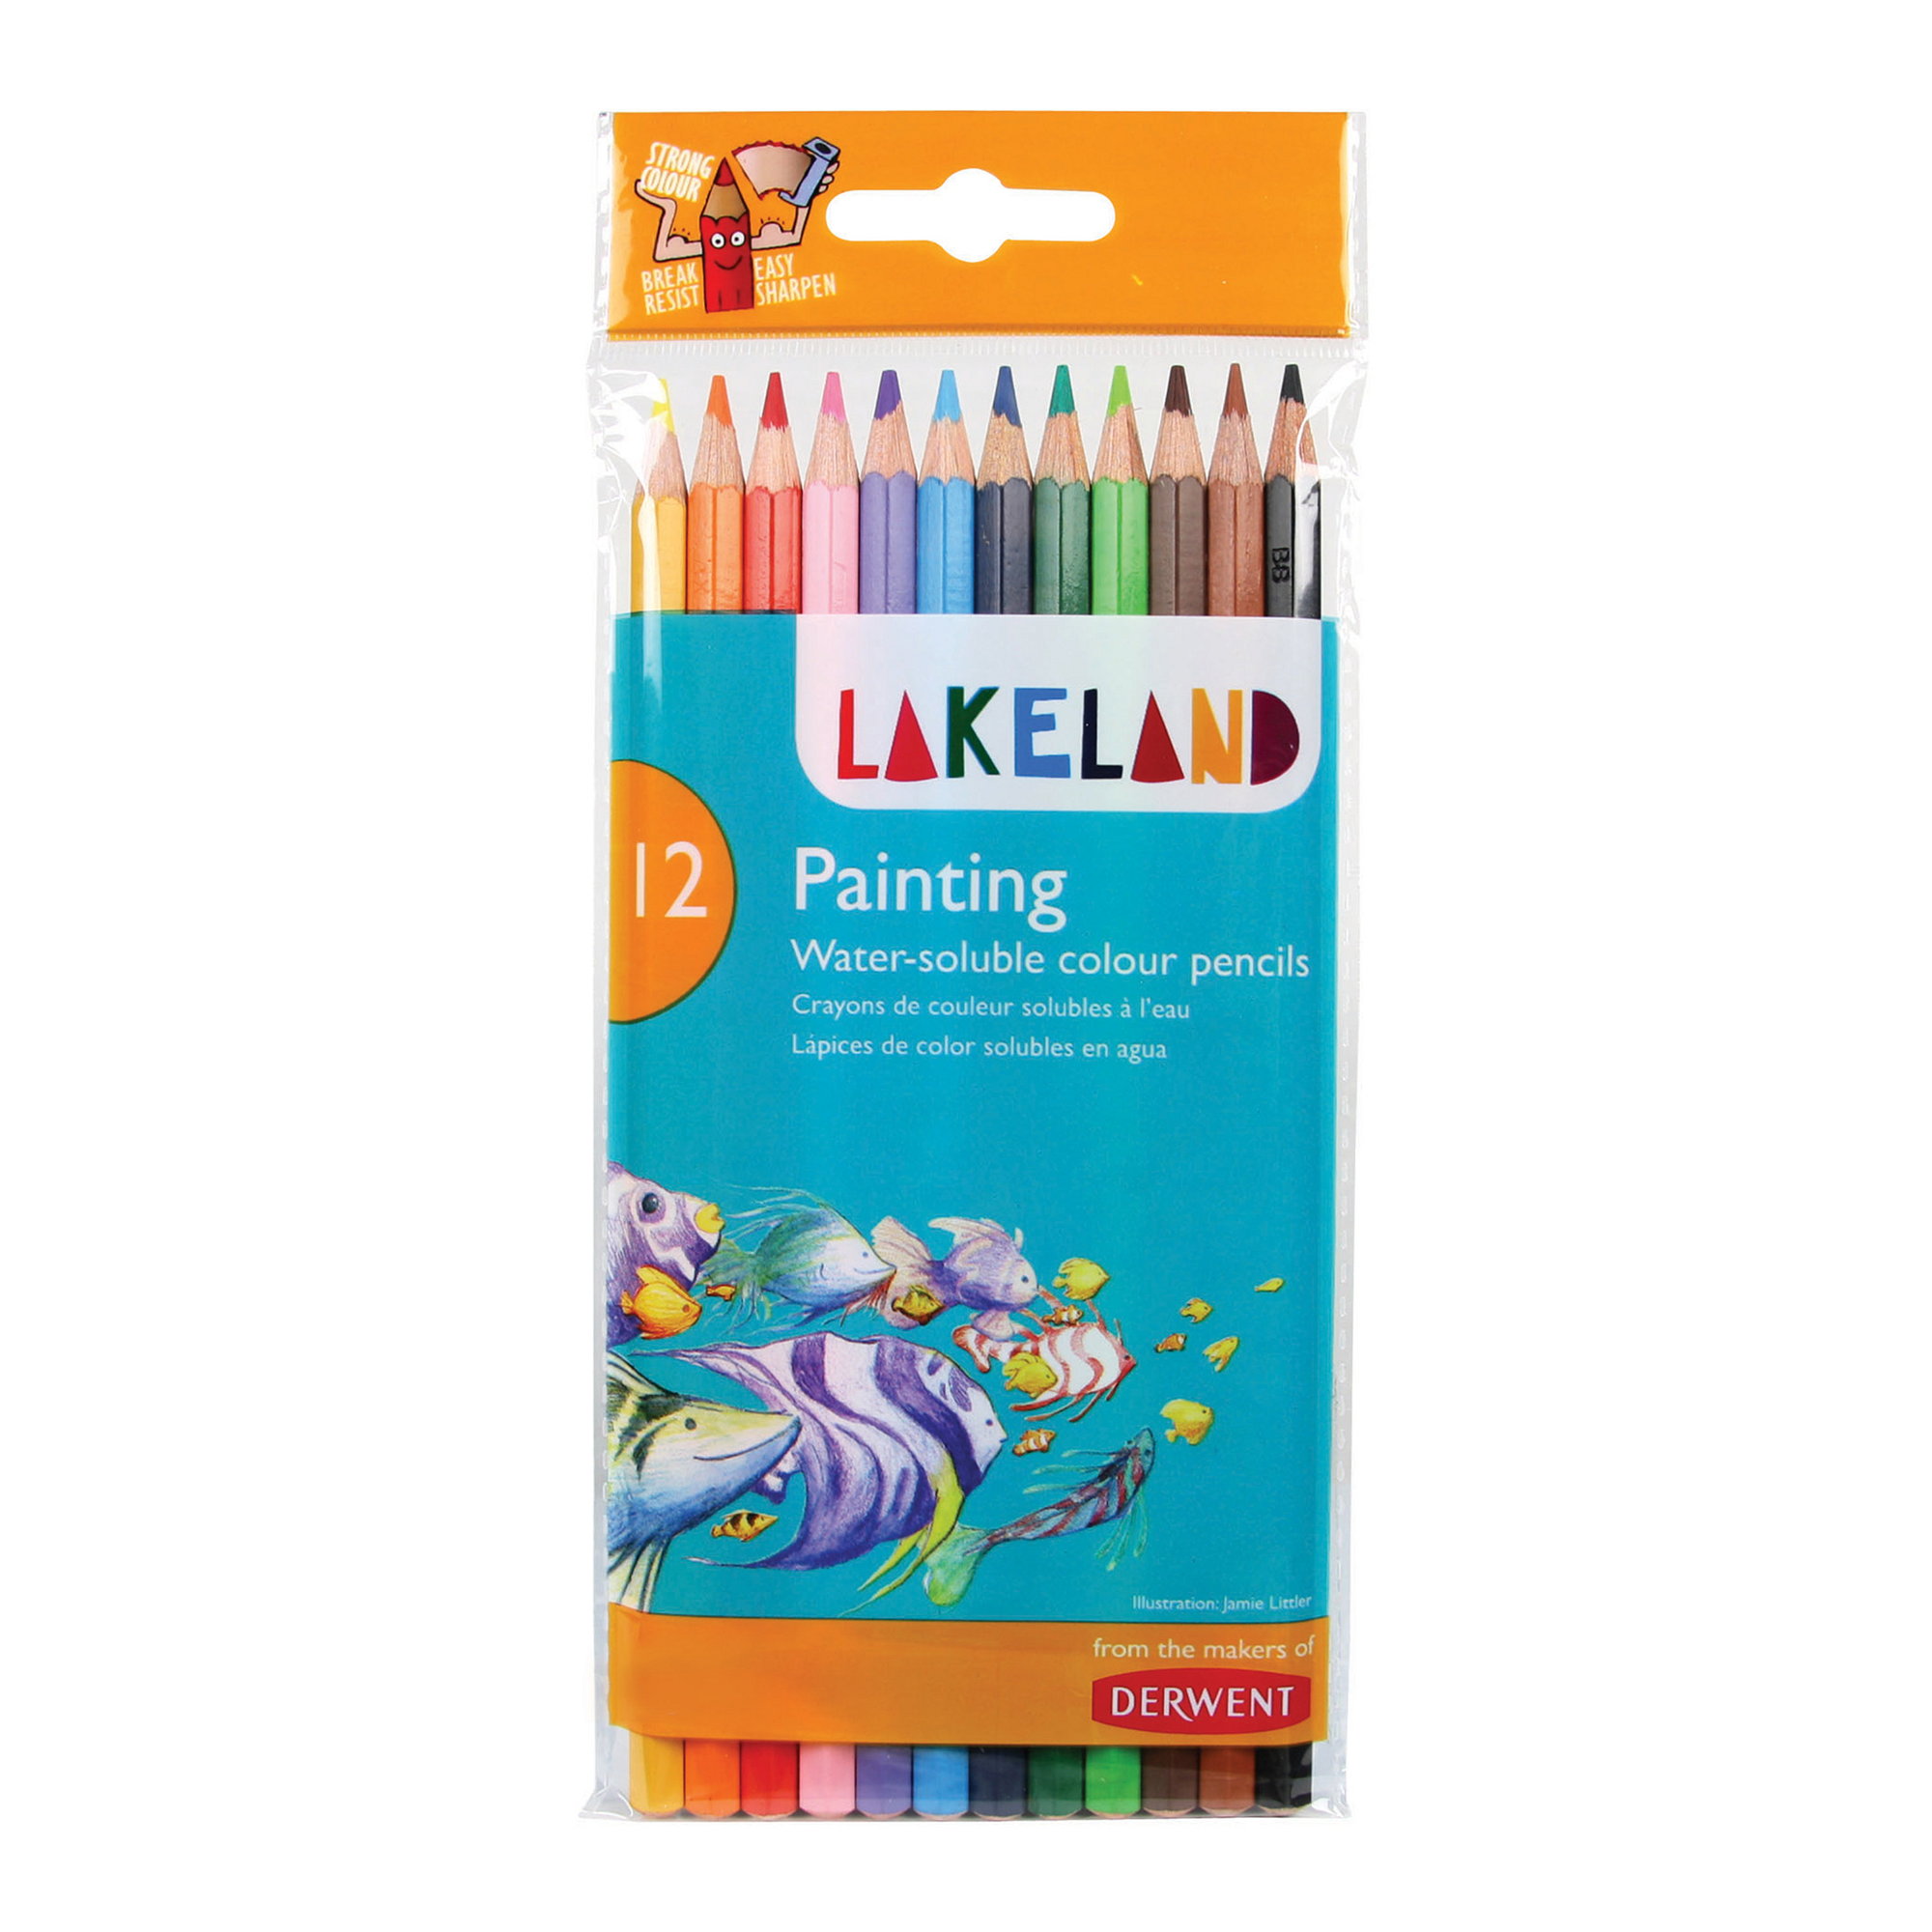 Lakeland Painting P12 Wallet